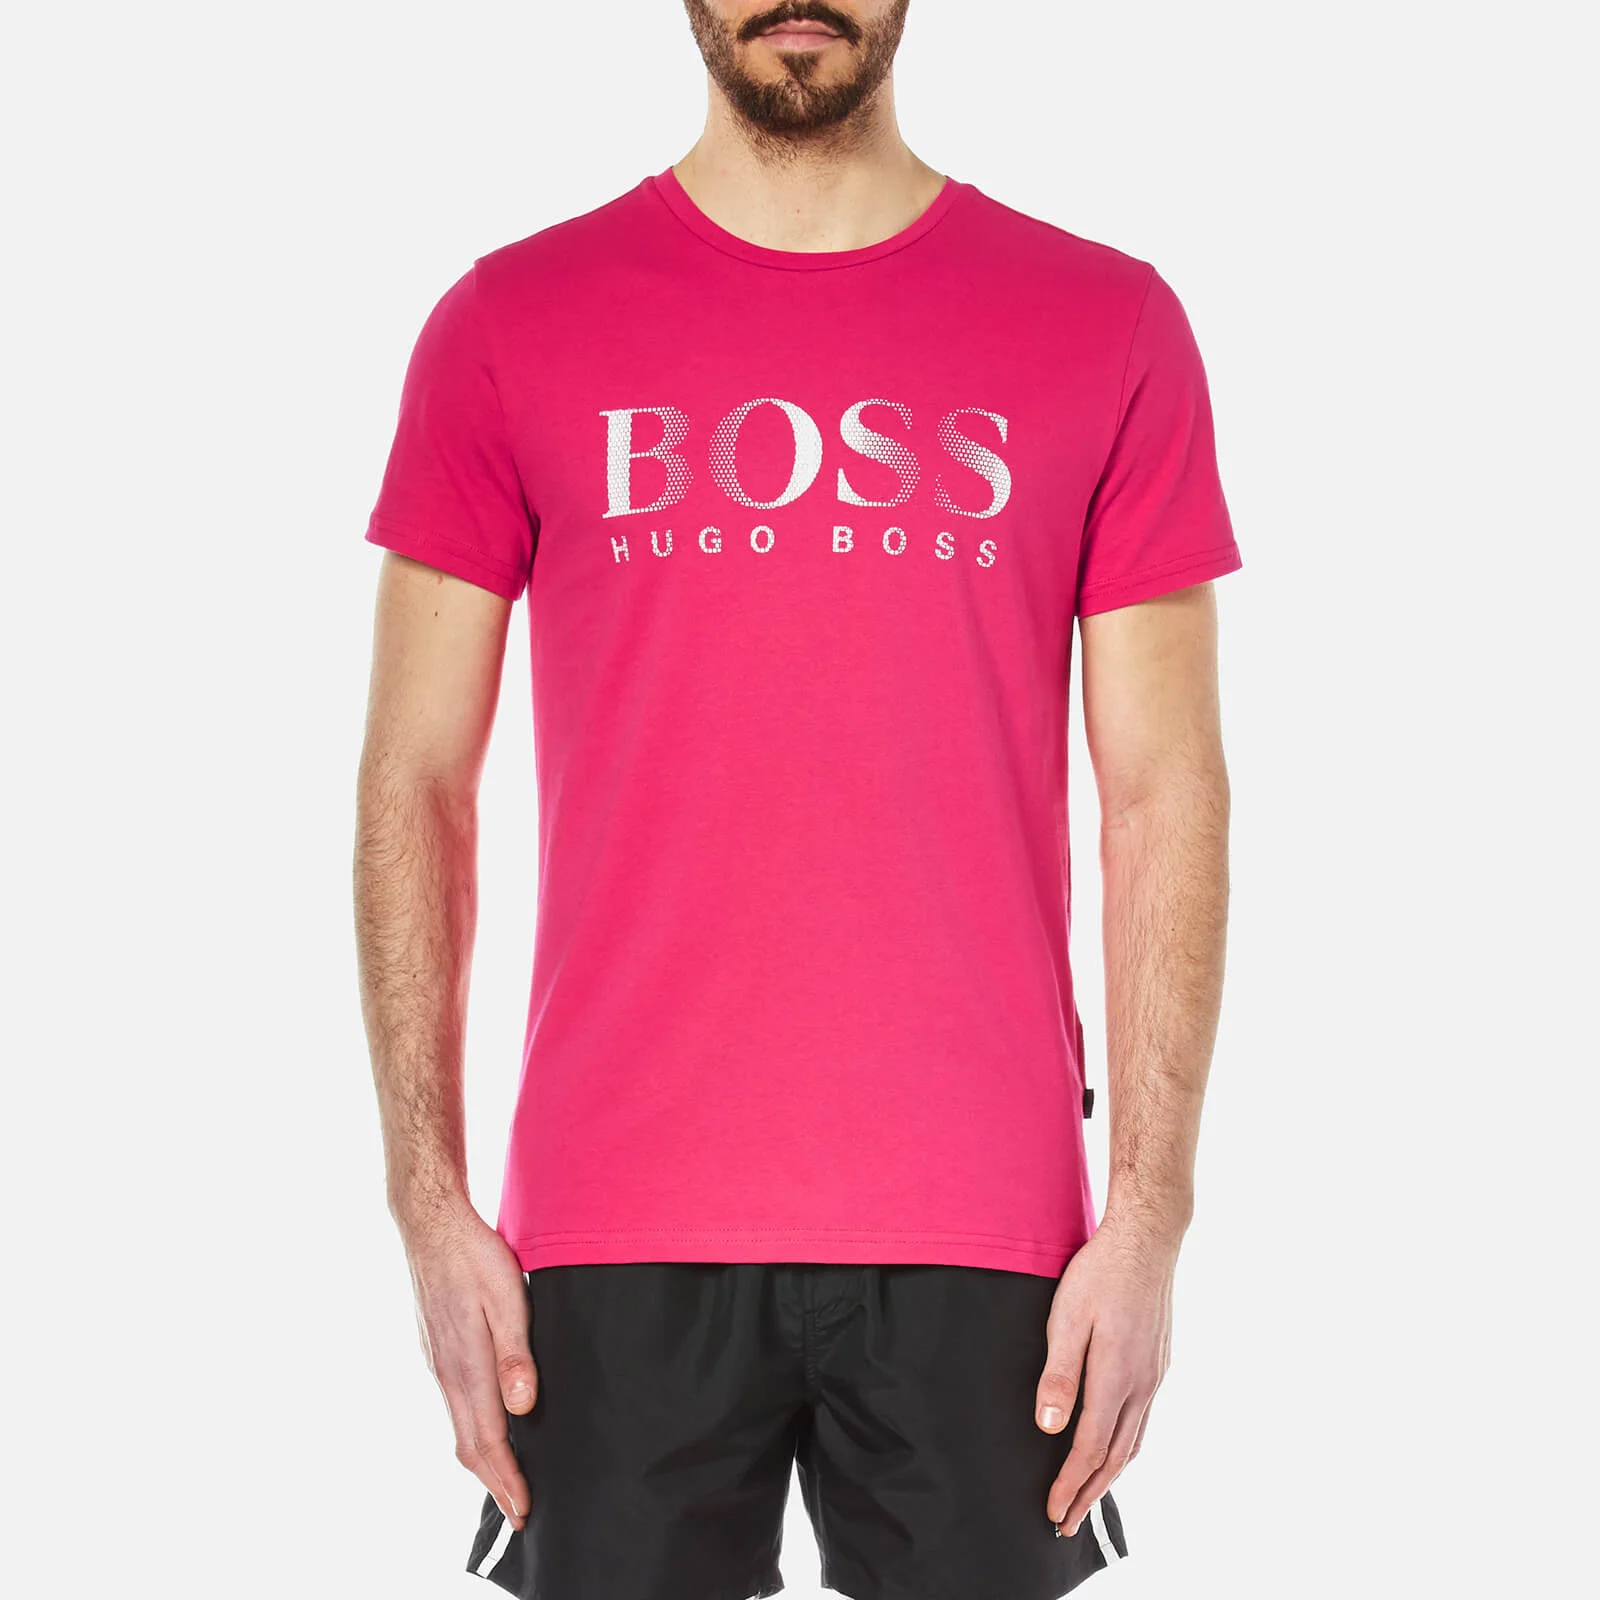 BOSS Hugo Boss Men's Large Logo T-Shirt - Pink Image 1